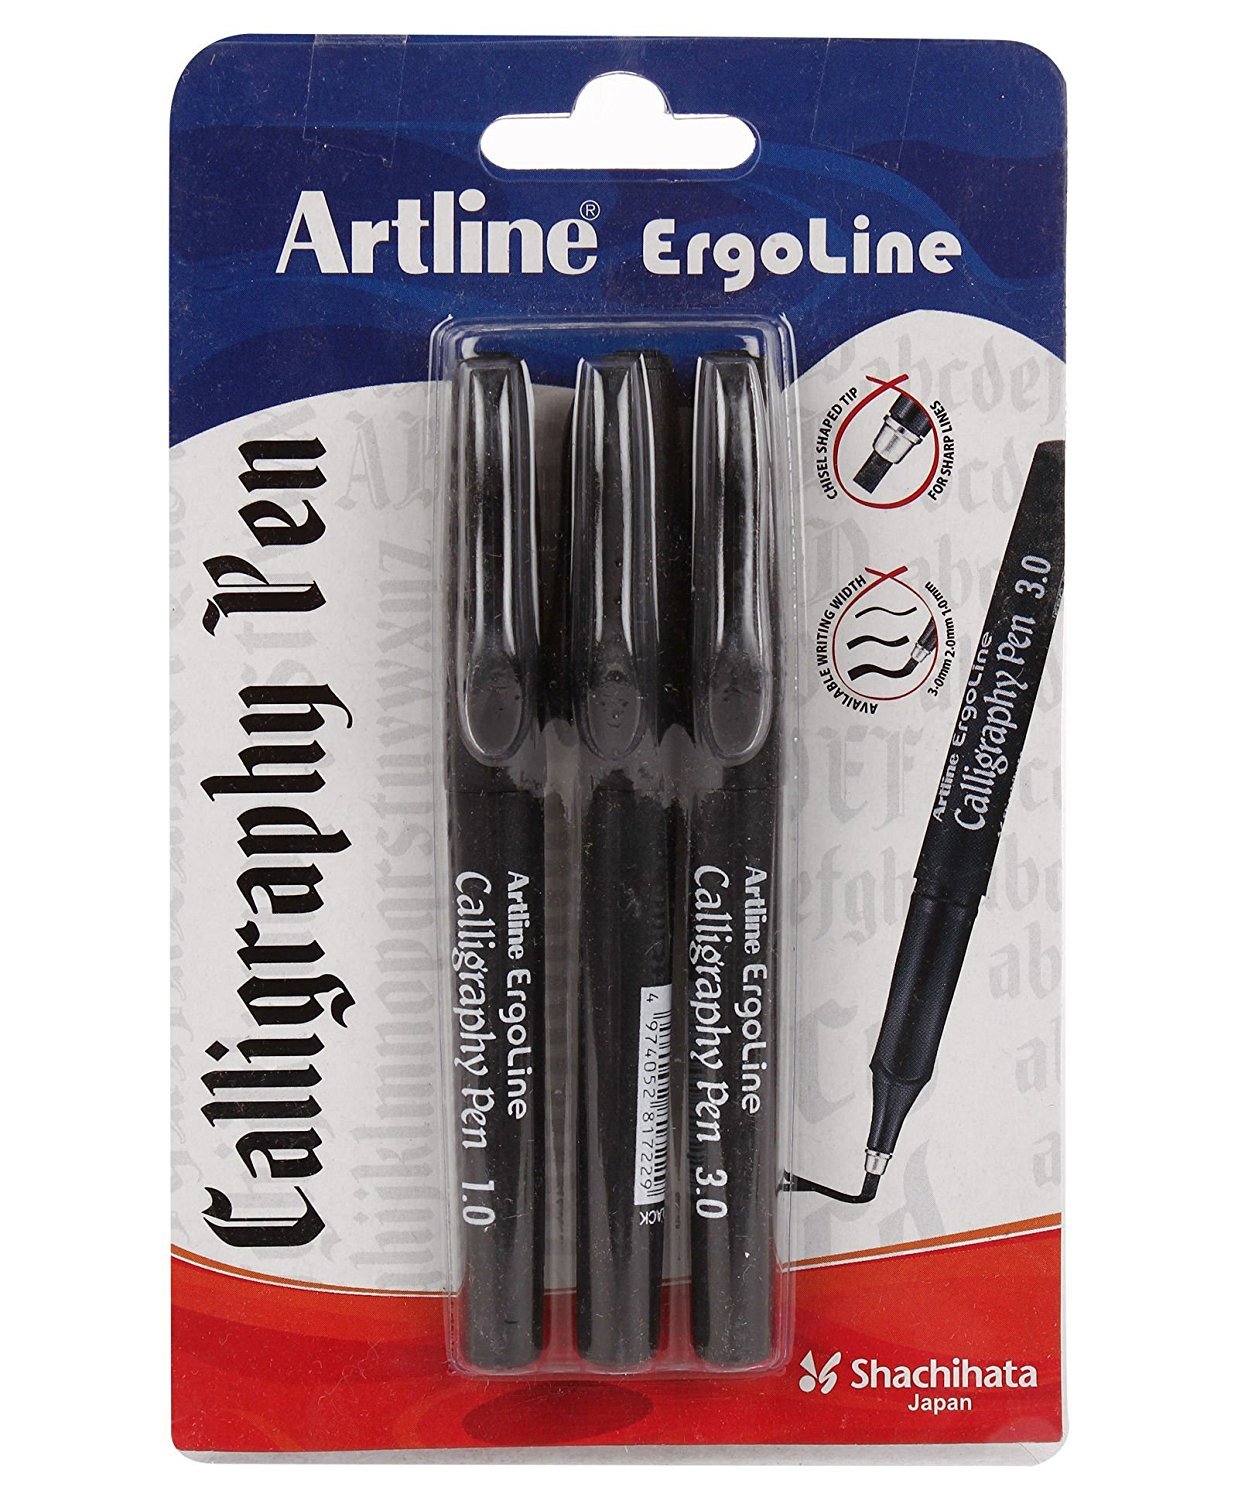 Artline Ergoline Calligraphy Pen Set with 3 Nib Sizes - Pack of 3 (Black)